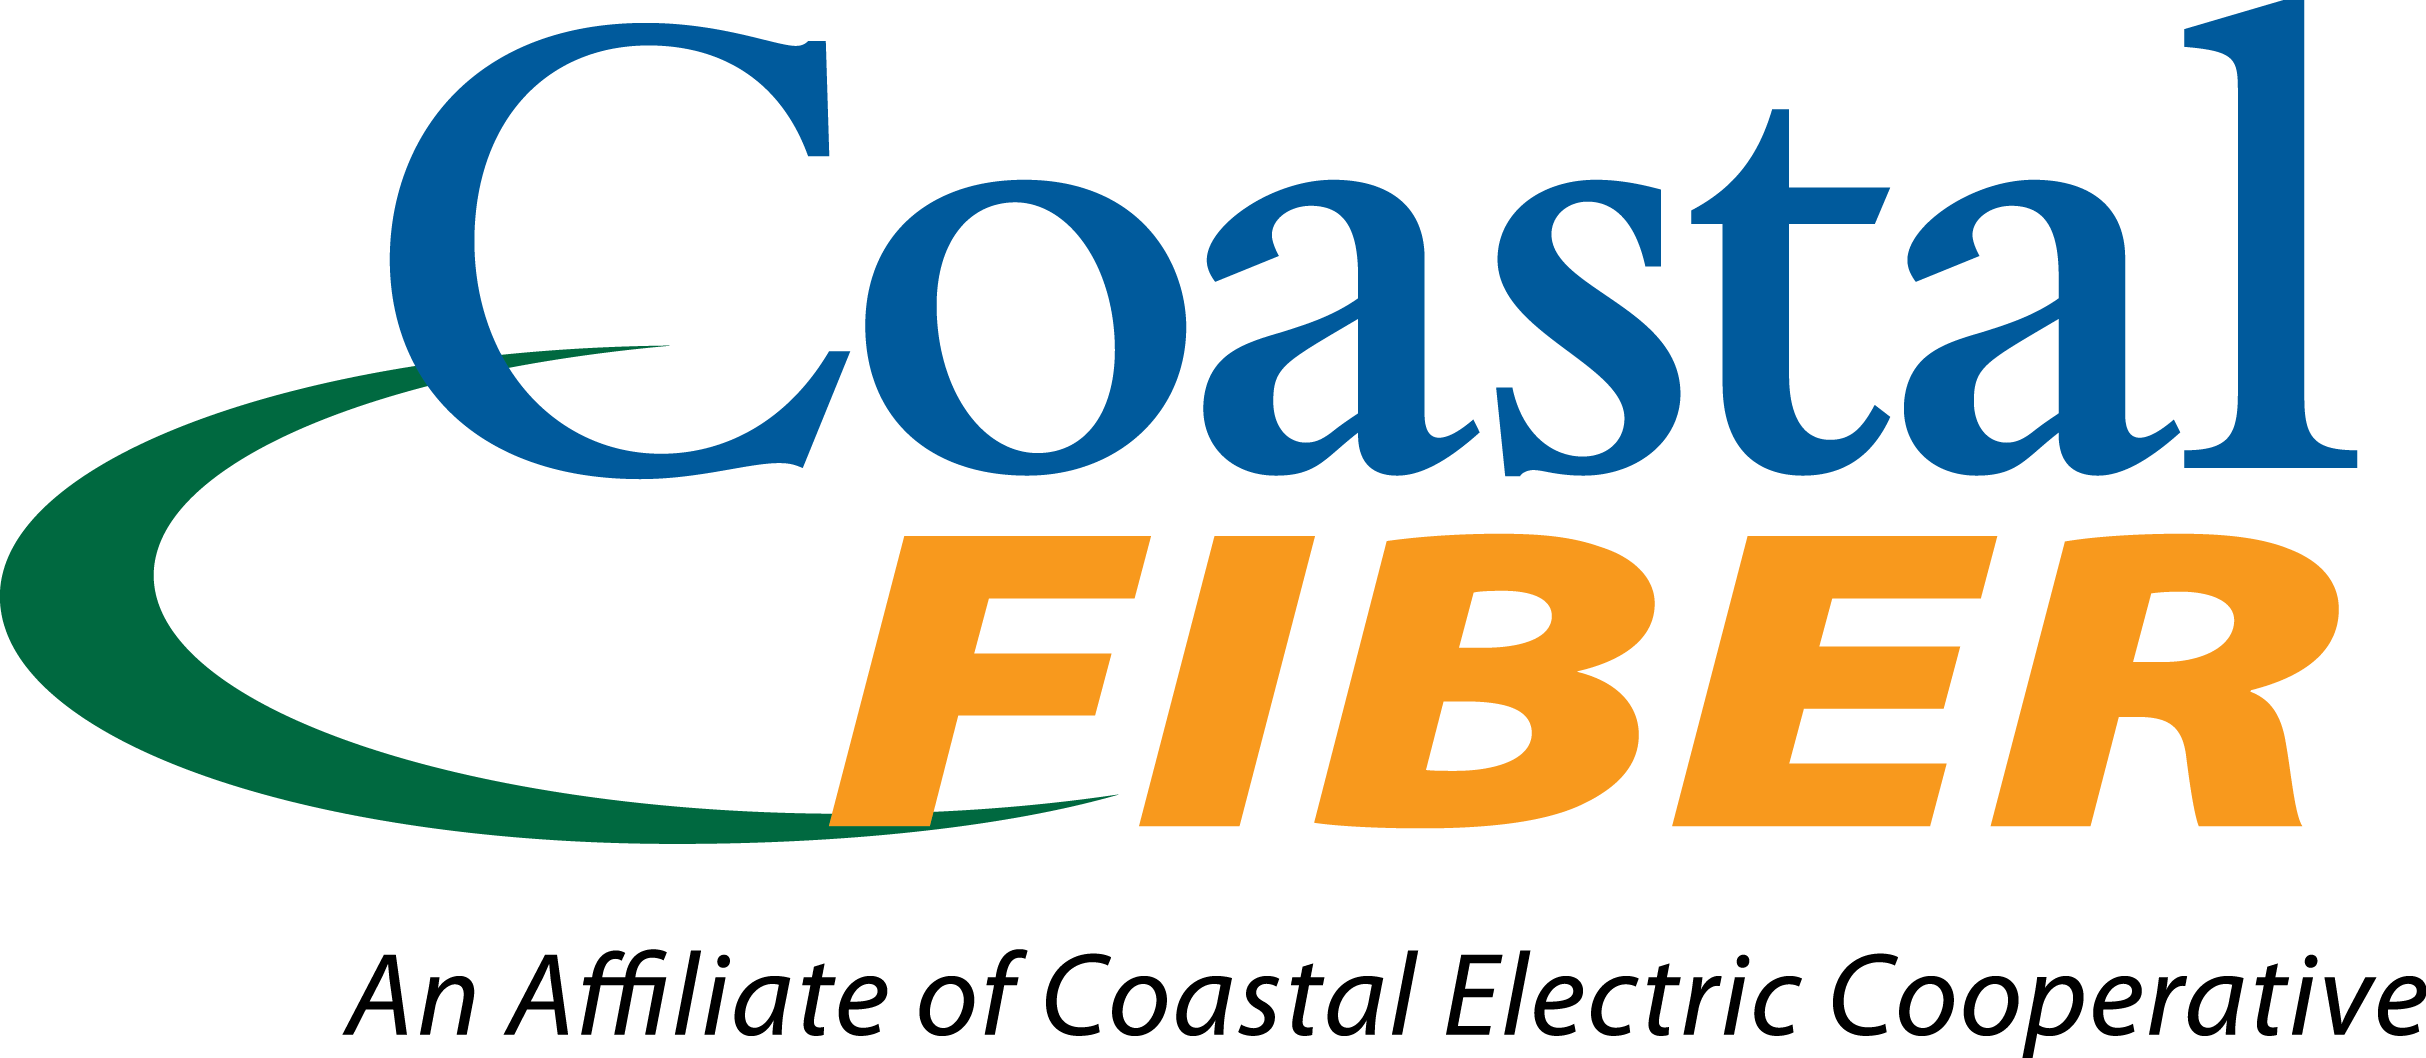 View profile for Coastal Fiber